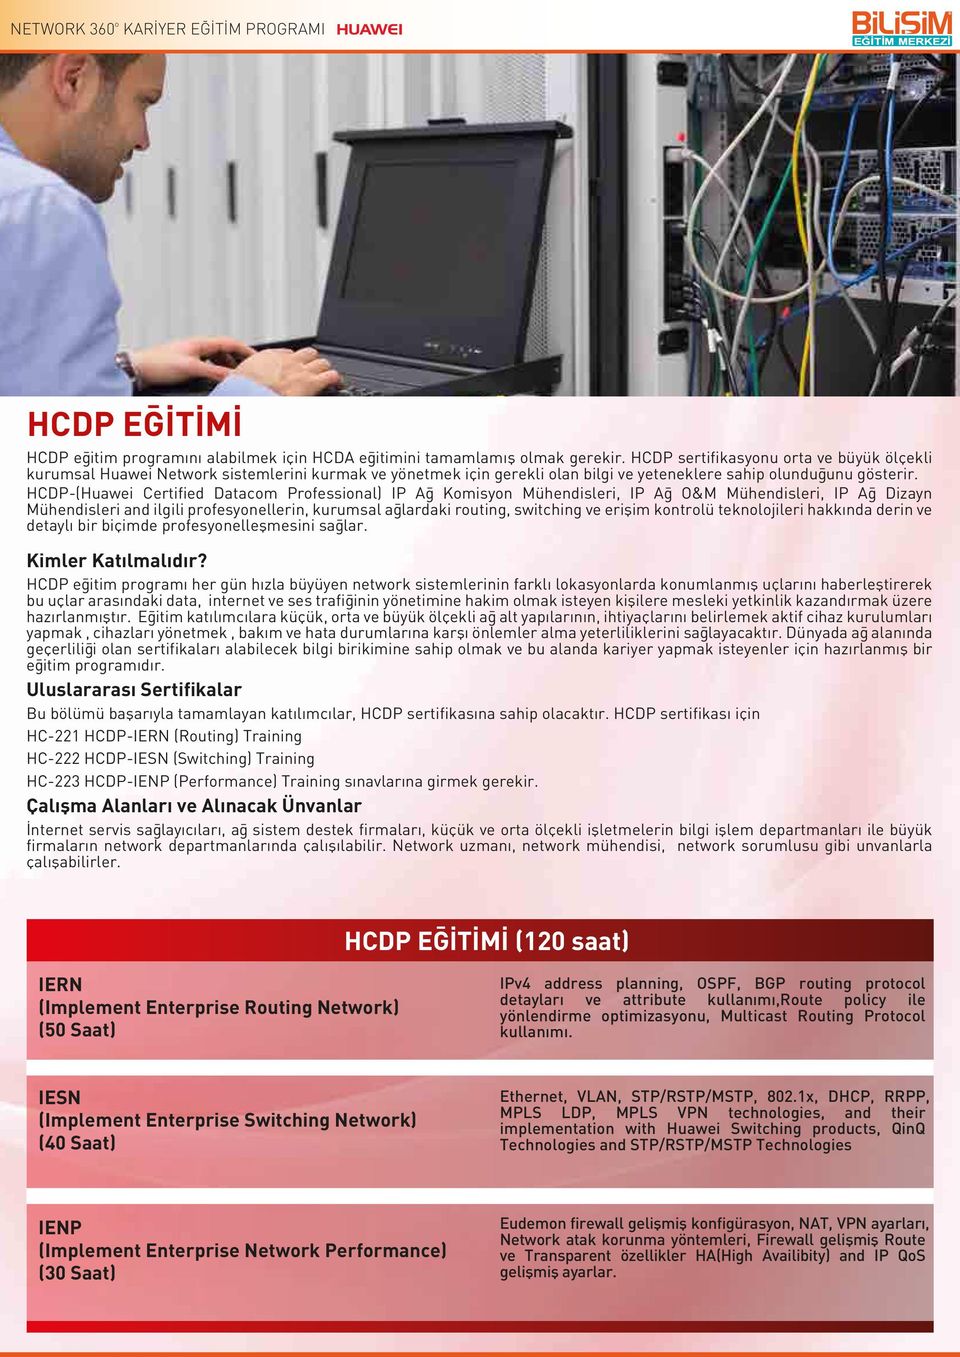 HCDP-(Huawei Certified Datacom Professional) IP Ağ Komisyon Mühendisleri, IP Ağ O&M Mühendisleri, IP Ağ Dizayn Mühendisleri and ilgili profesyonellerin, kurumsal ağlardaki routing, switching ve